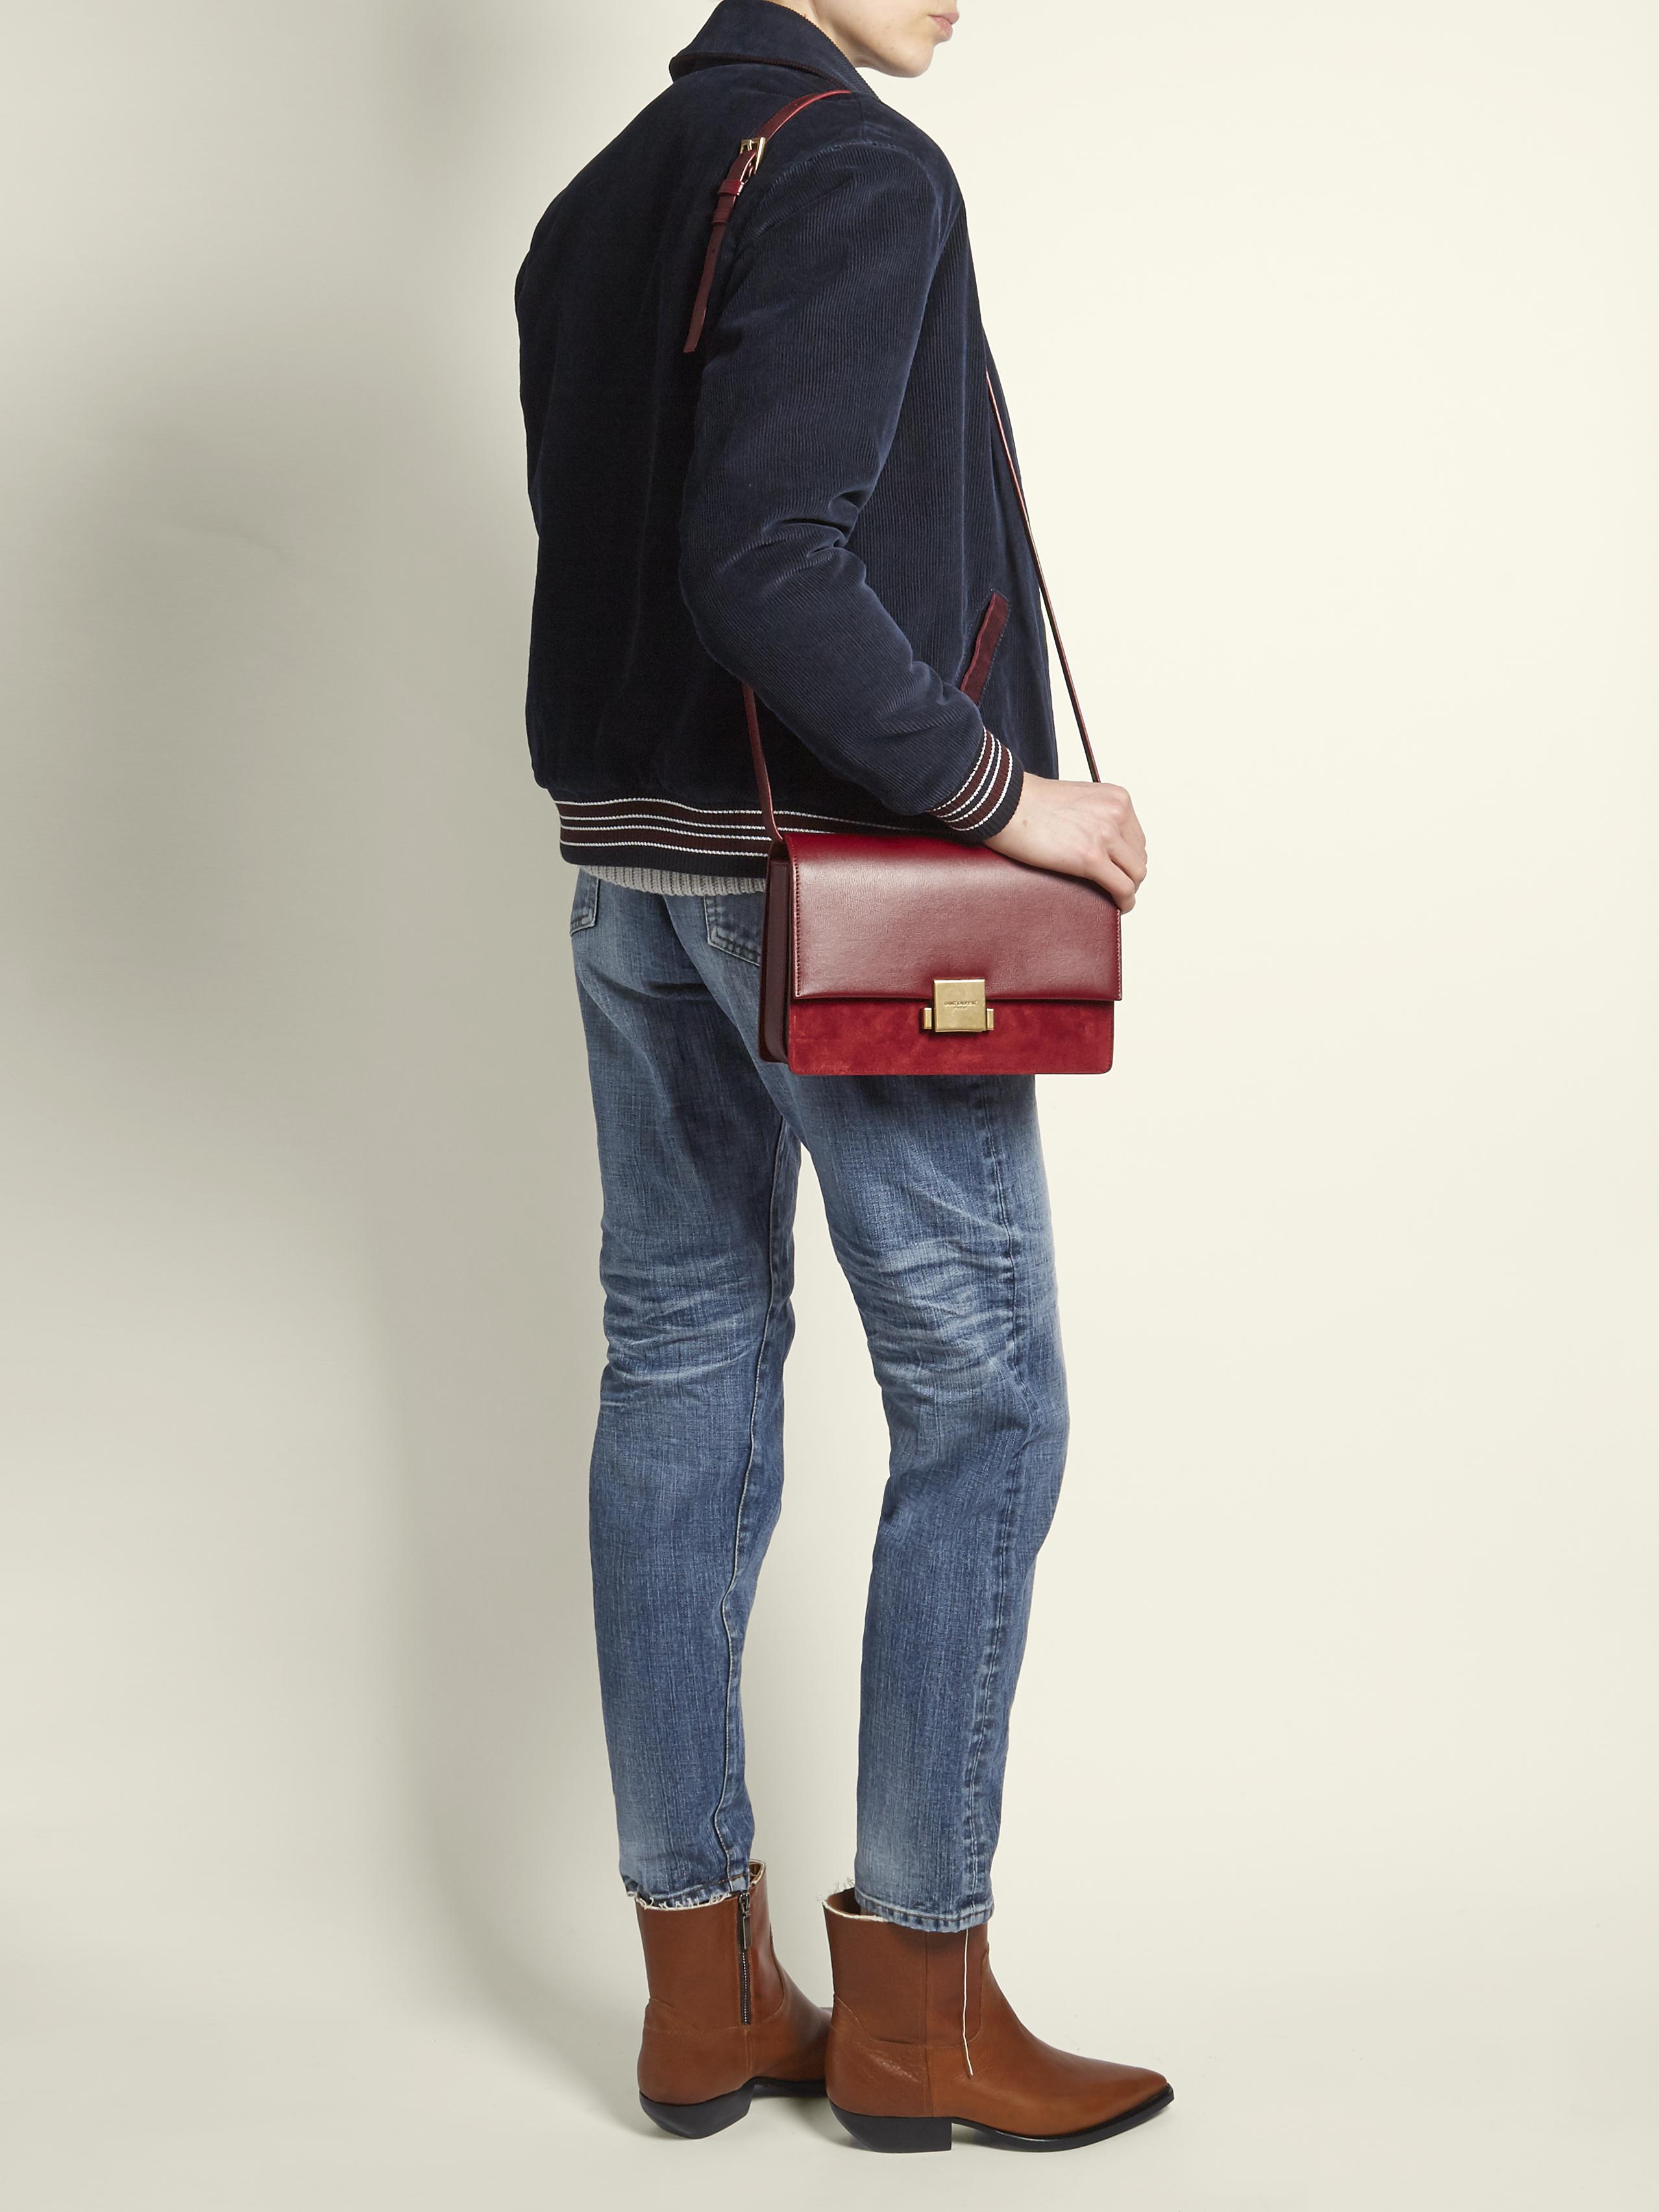 New Saint Laurent Bellechasse Shoulder Bag Suede and Leather Medium